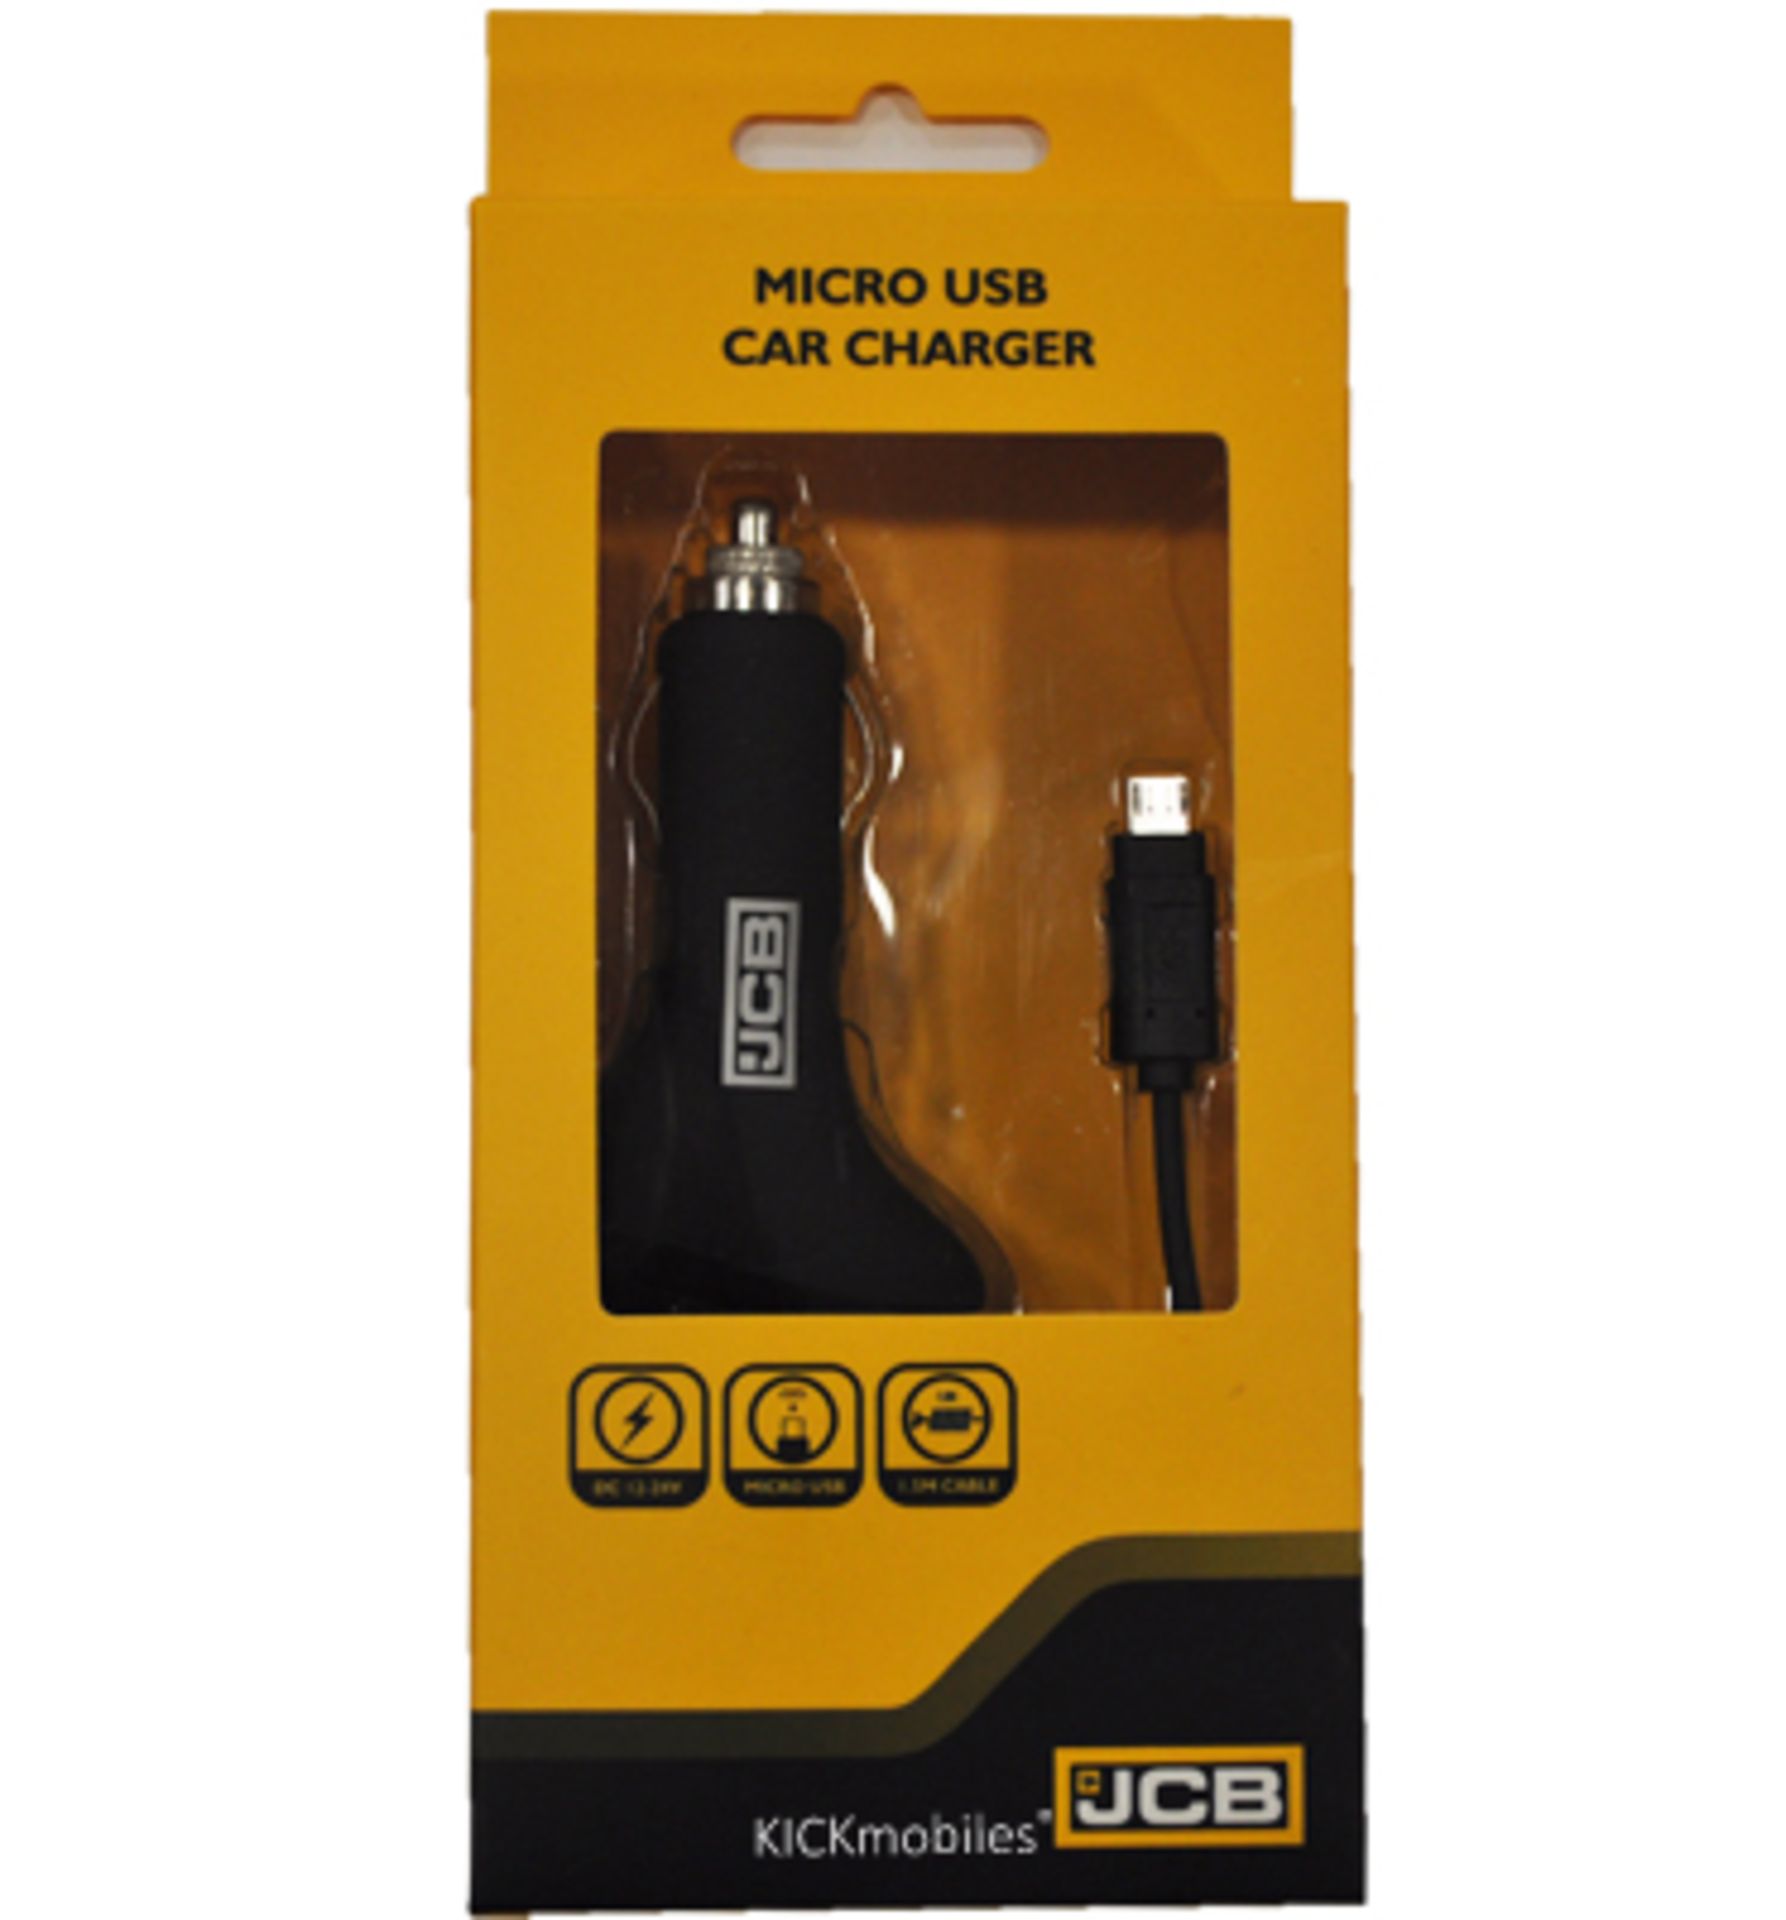 V *TRADE QTY* Brand New JCB 12V Micro USB Car Charger - DC 12-24V - Micro USB Connector - 1.5M - Image 2 of 2